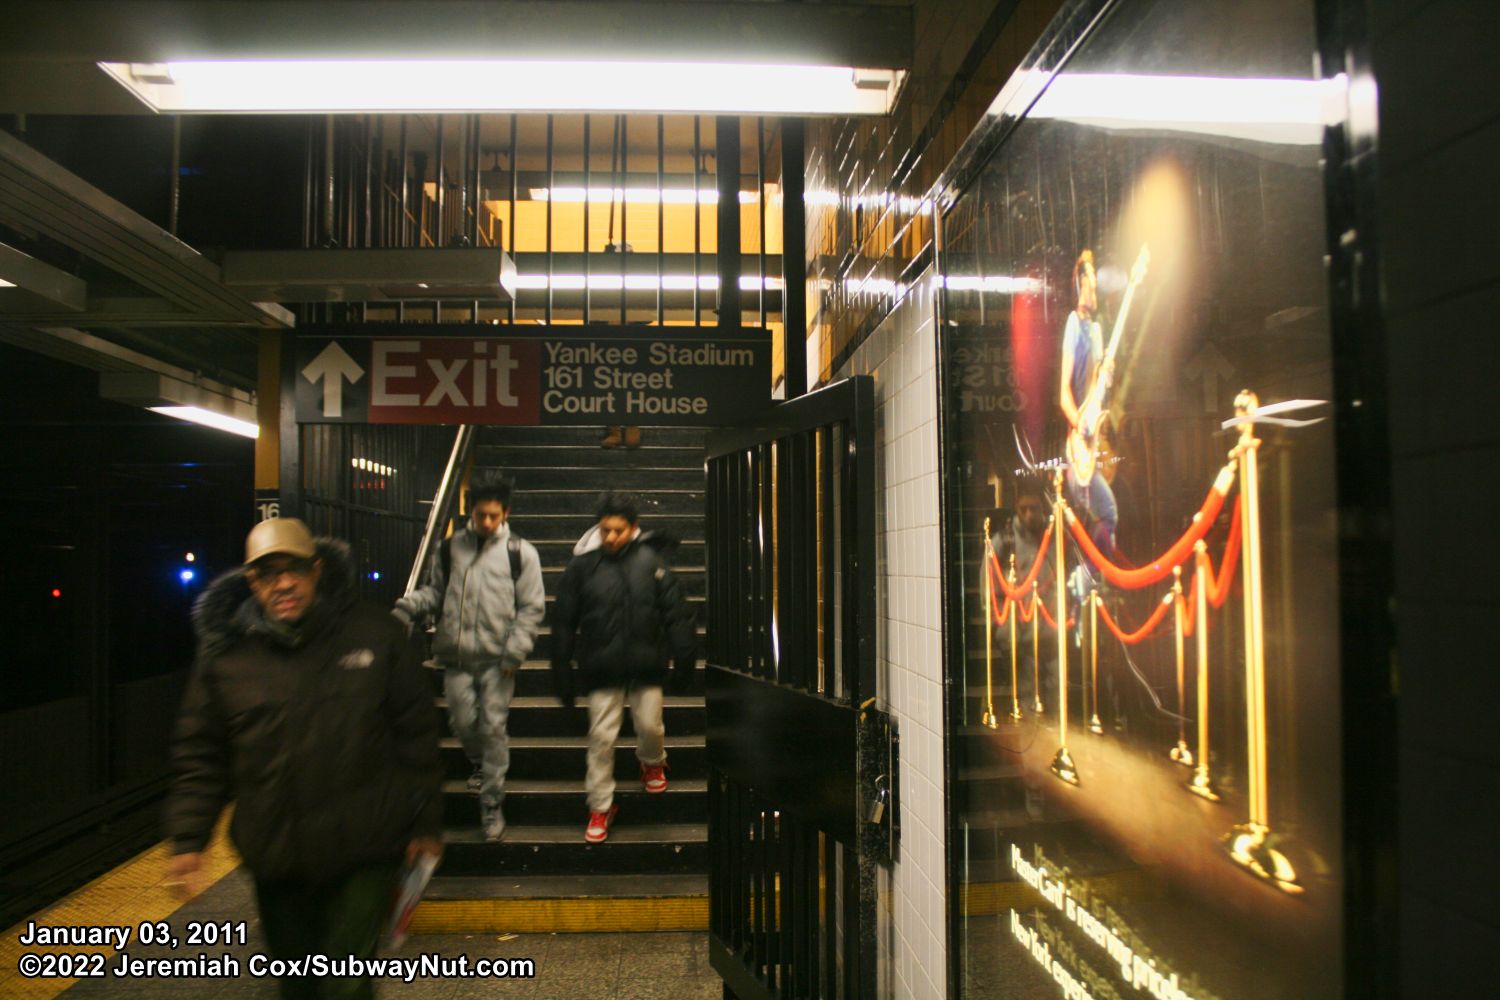 161st Street - Yankee Stadium Subway Station, Bronx, New Y…